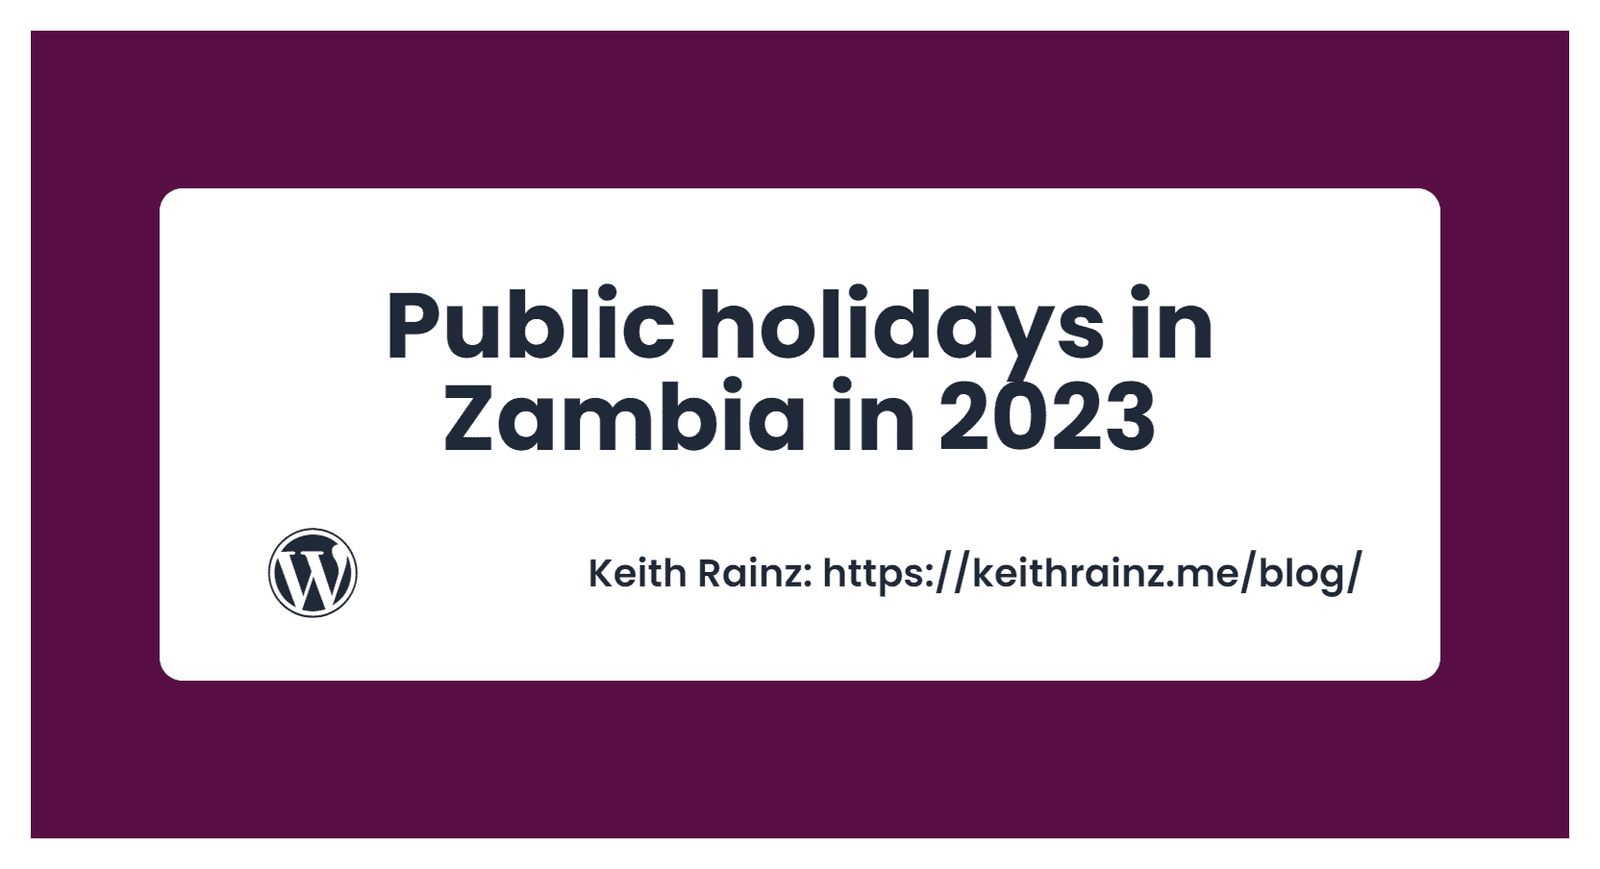 Public holidays in Zambia in 2023